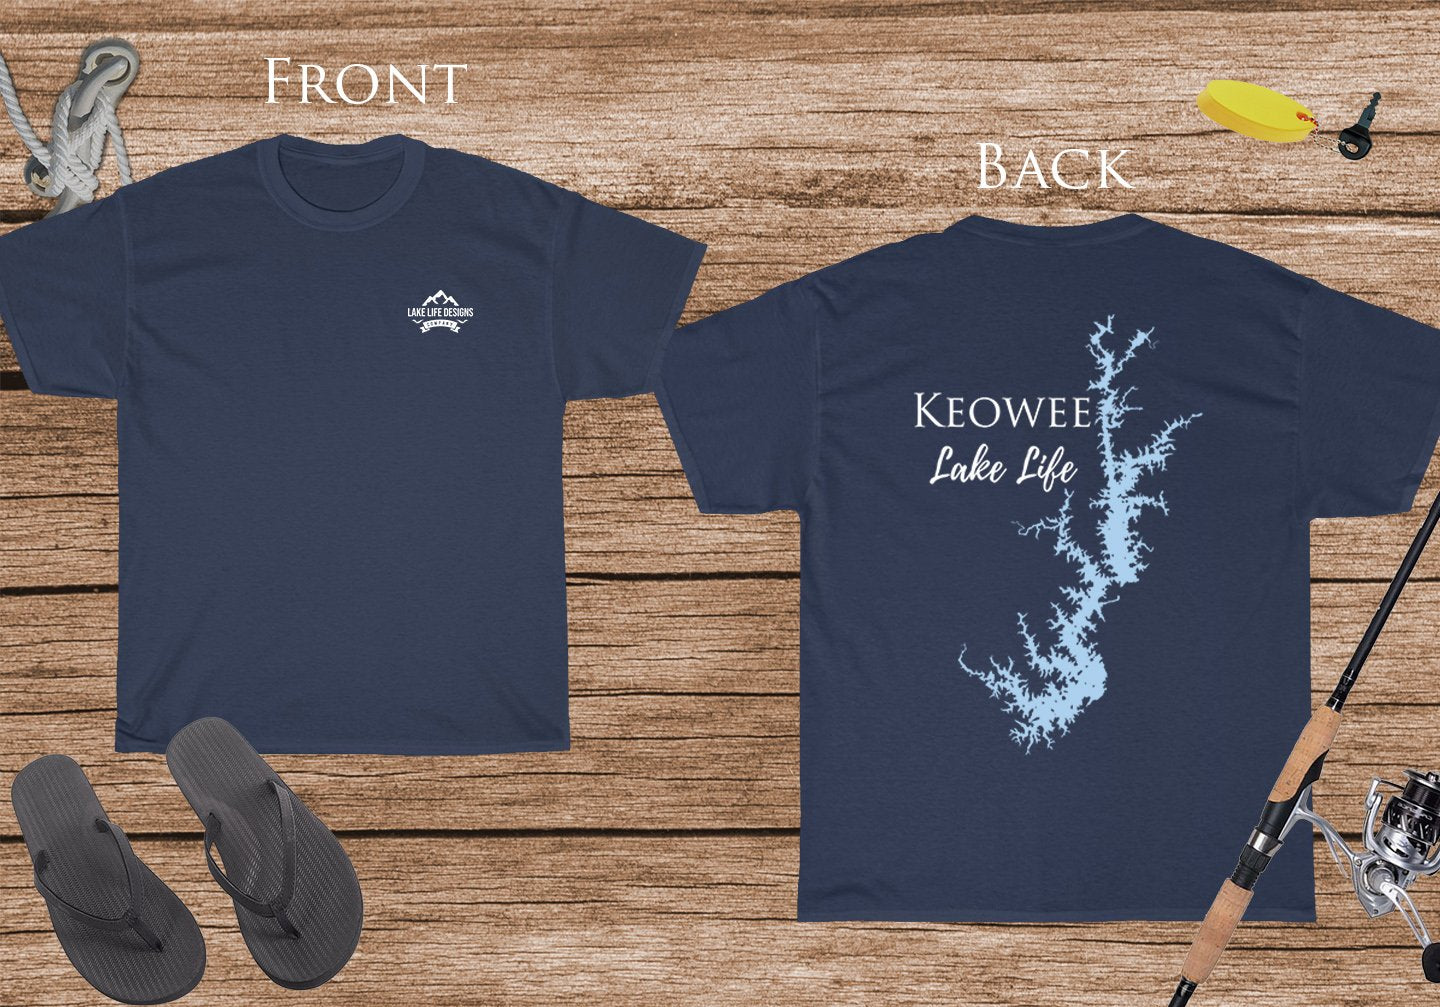 Keowee lake Life - Cotton Short Sleeved - FRONT & BACK PRINTED - Short Sleeved Cotton Tee - South Carolina Lake